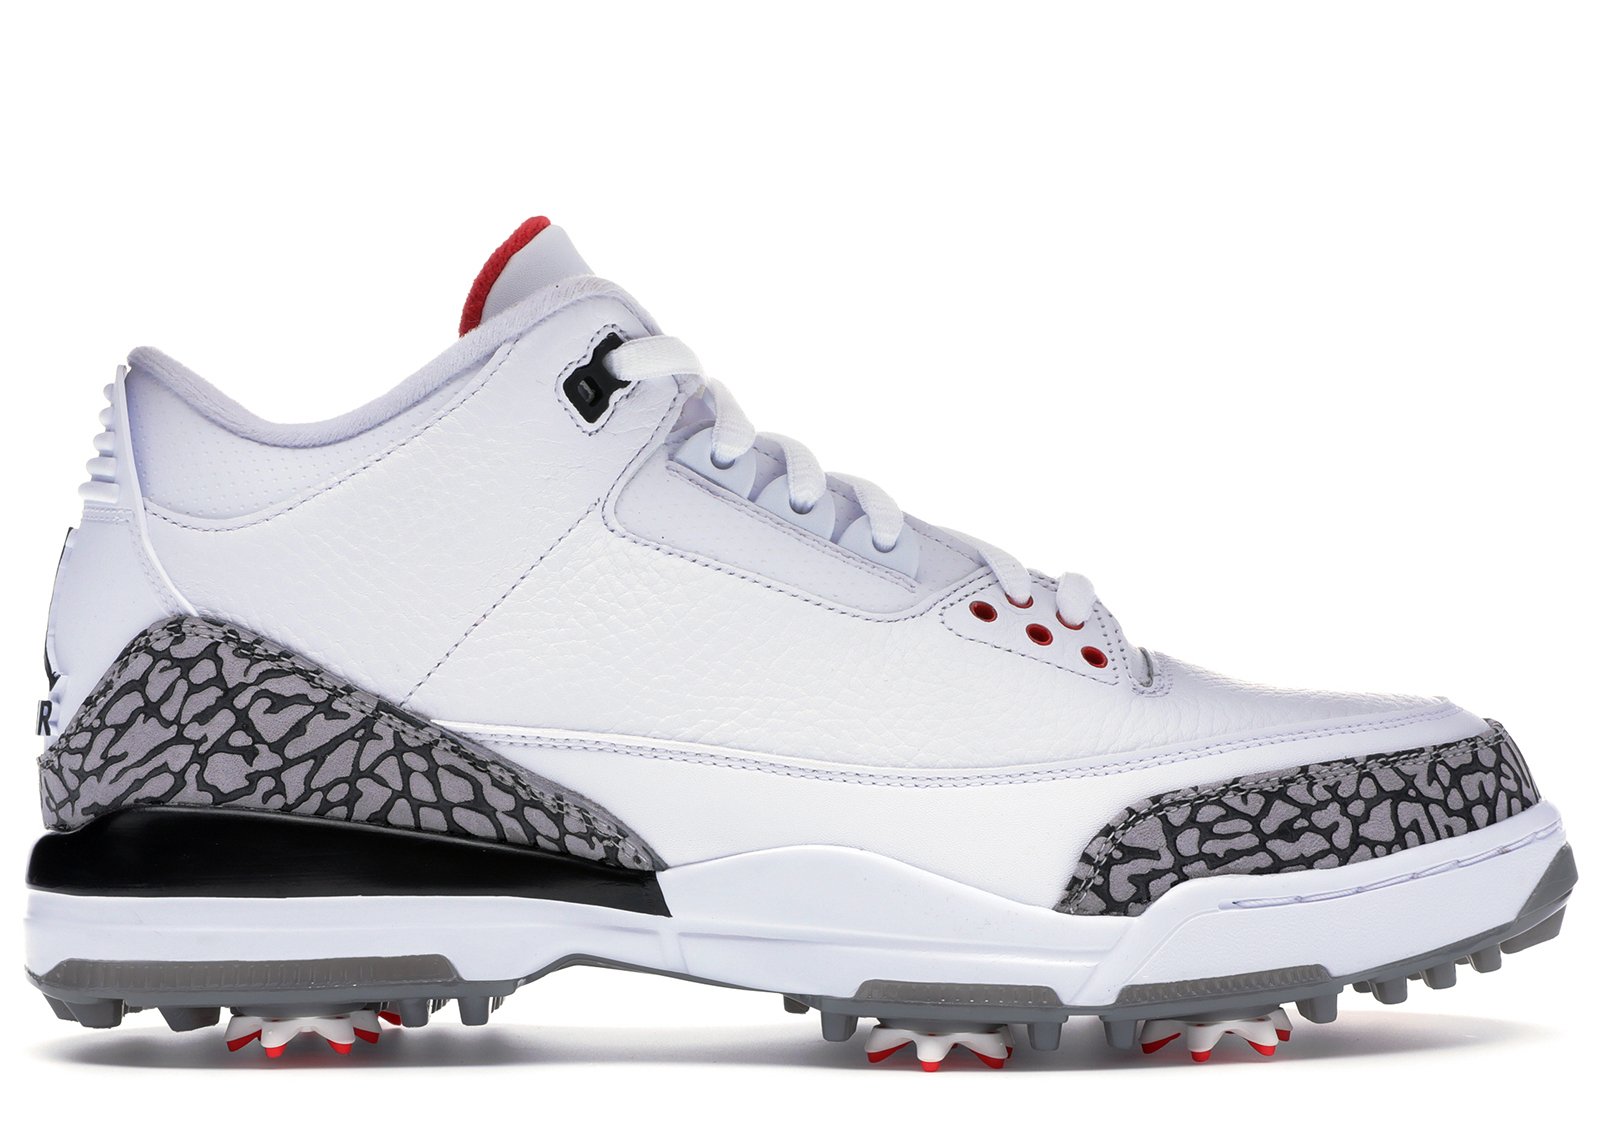 Jordan 3 Retro Golf White Cement sneakers